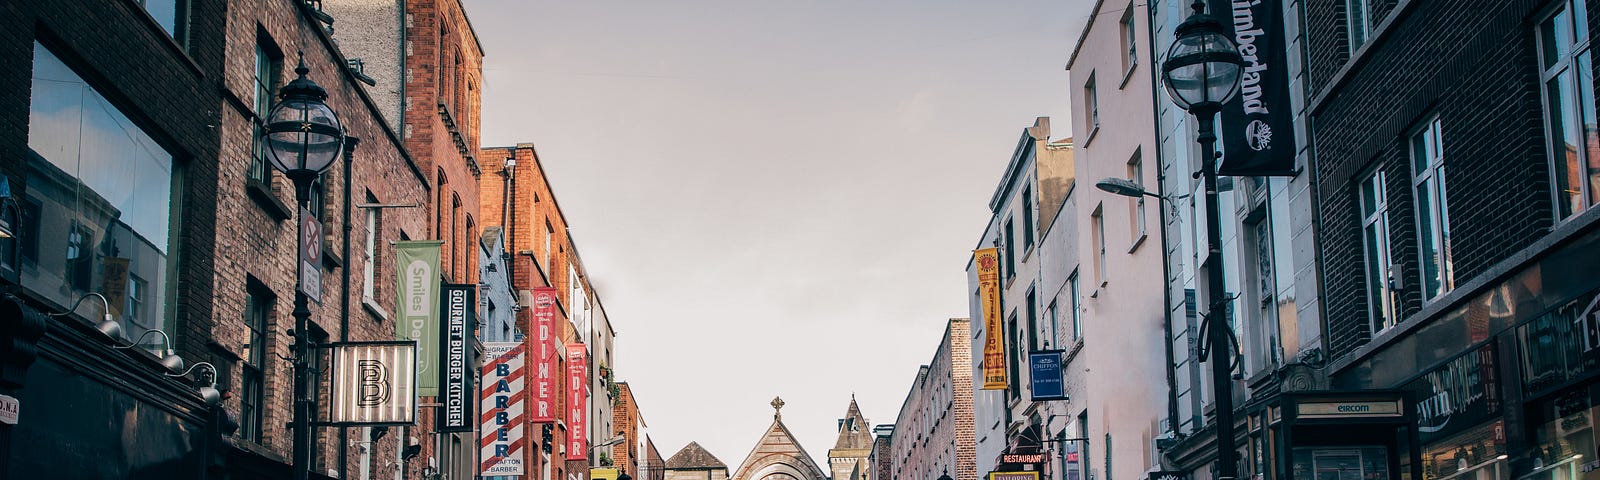 Picture of Ann Street in Dublin, Ireland